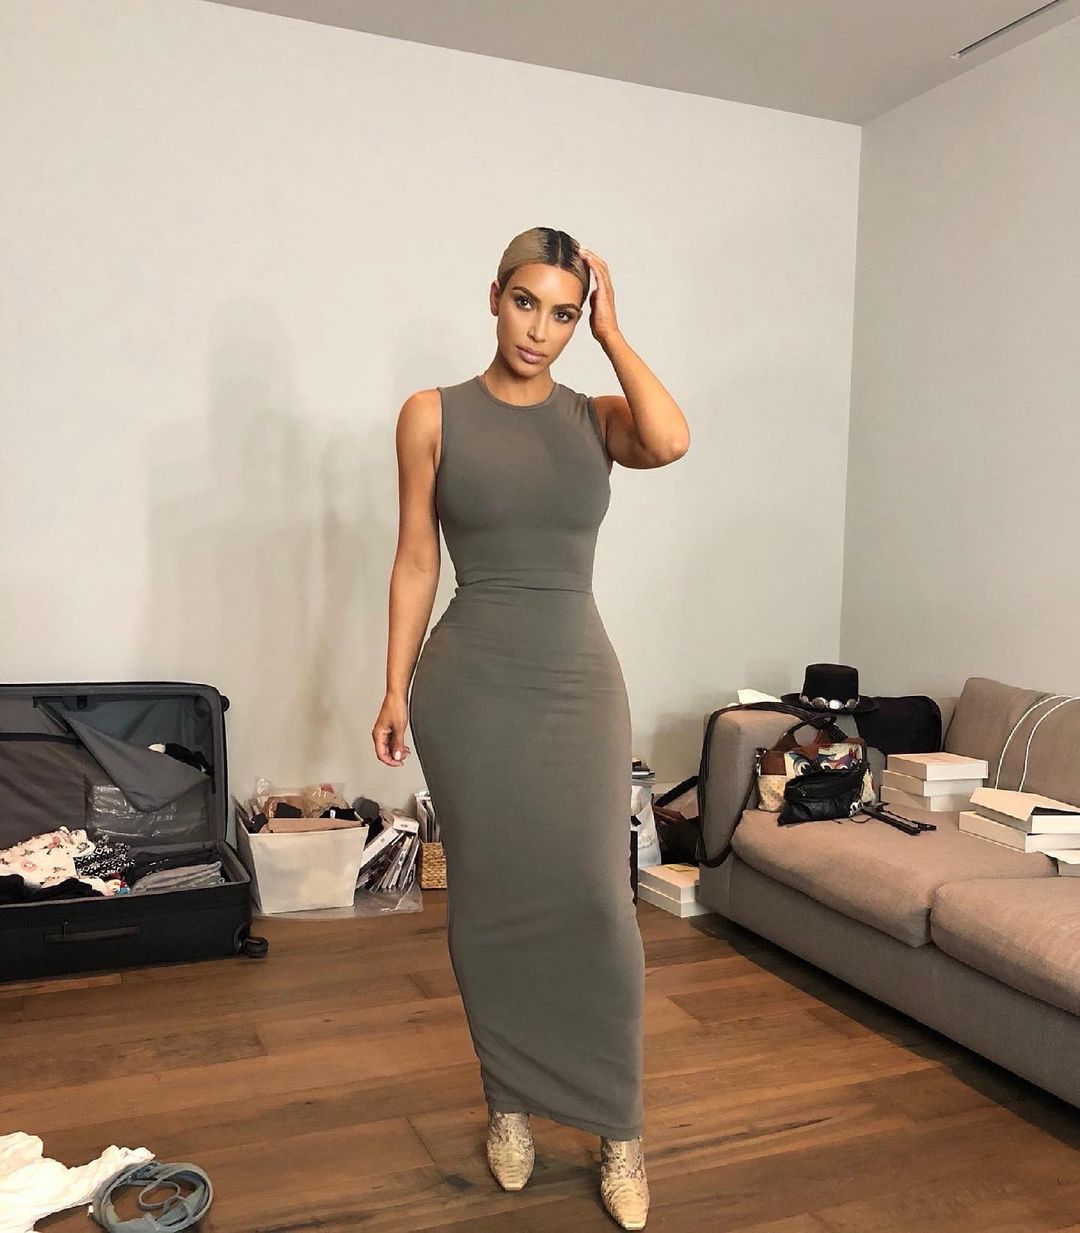 Kim Kardashian Sets Temperatures Soaring With Her Racy Social Media Photos Take A Look News18 8195